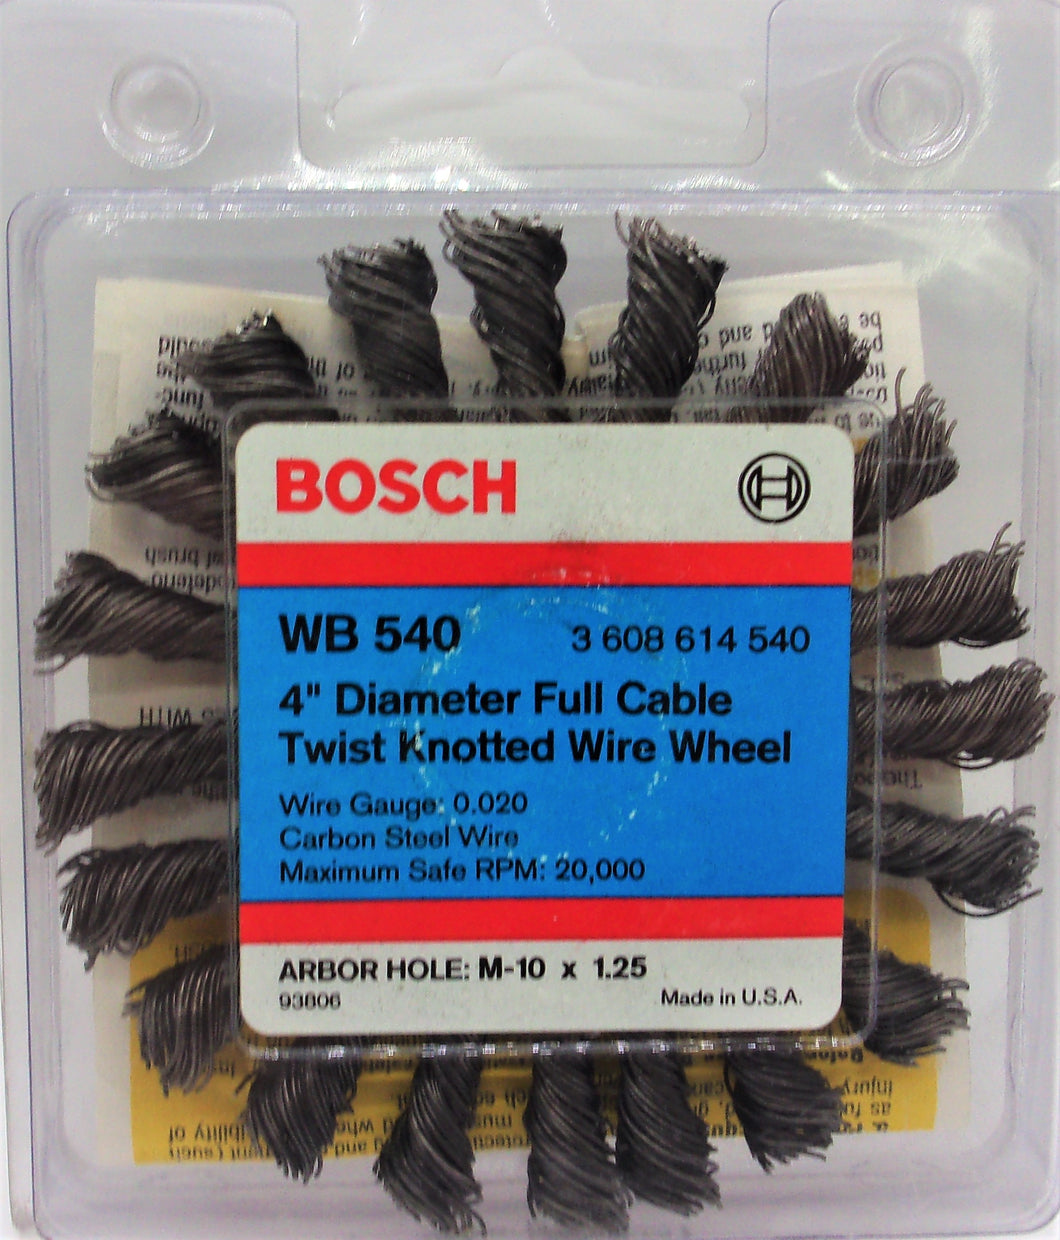 Bosch WB 540 4